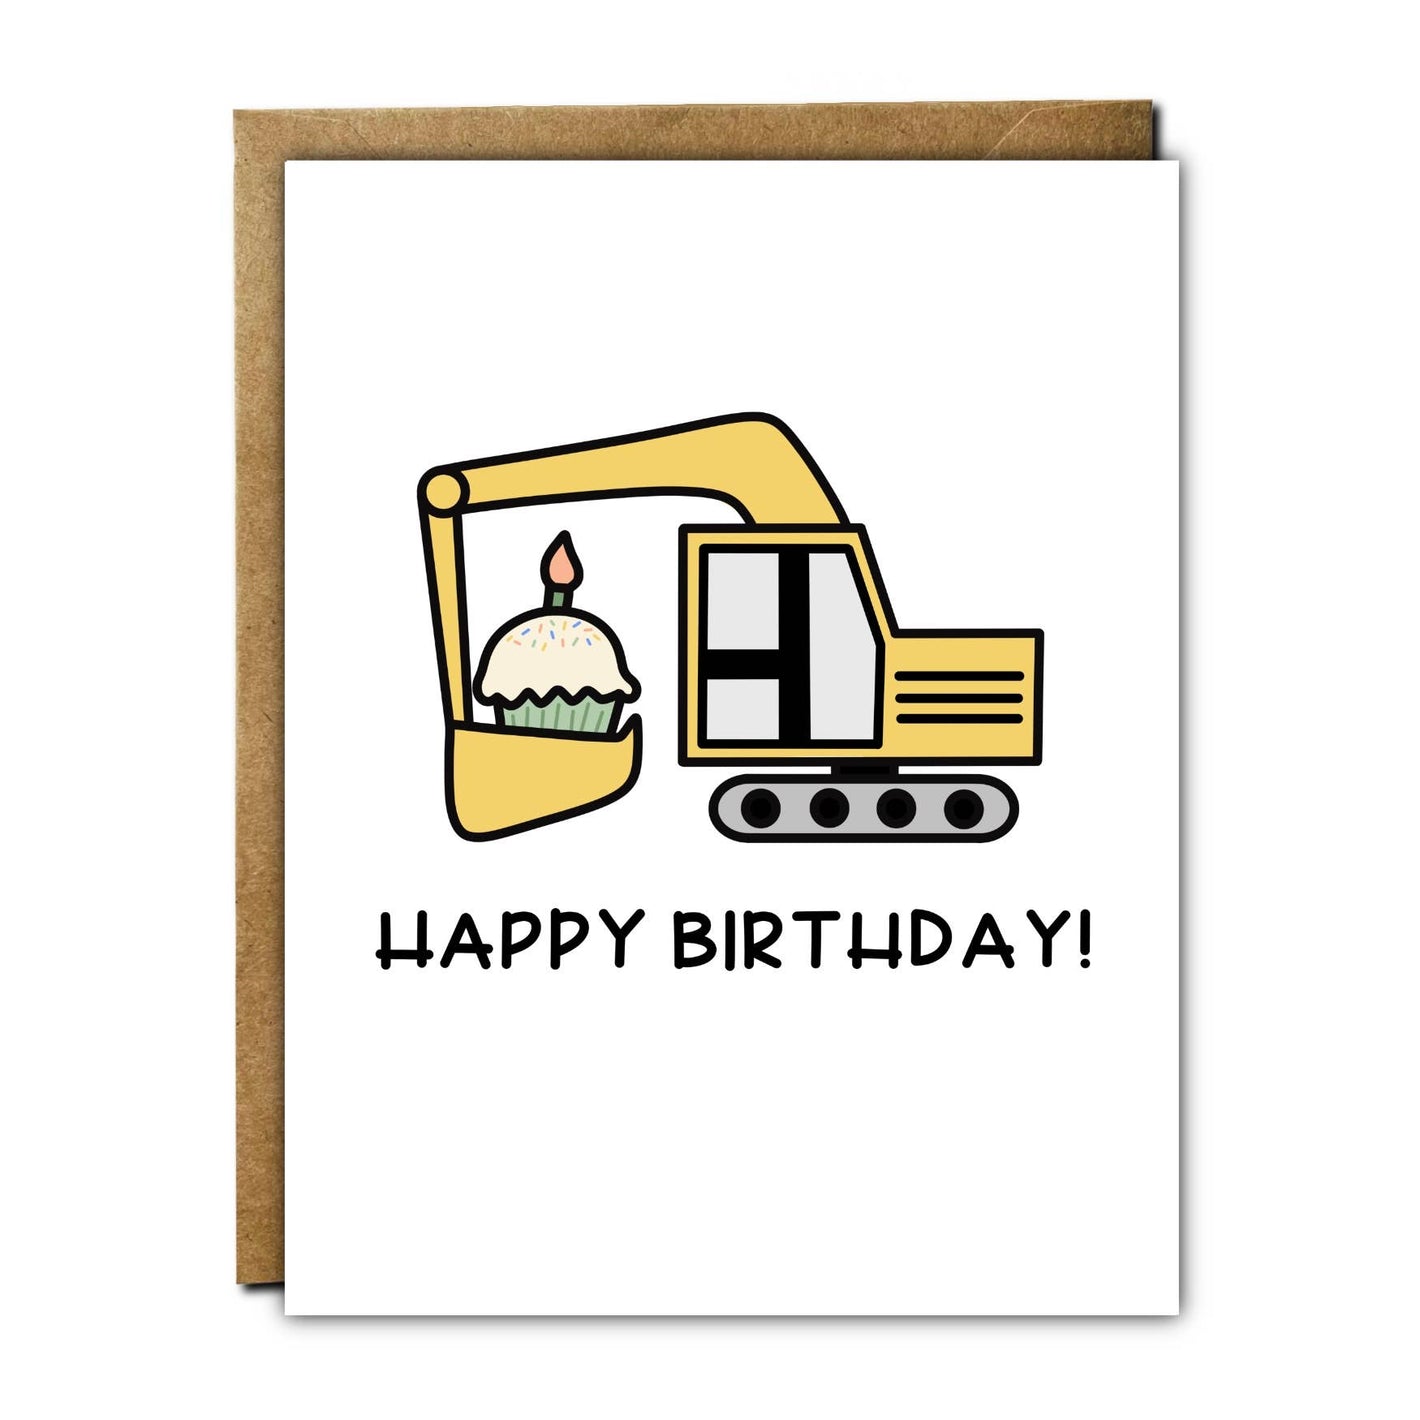 Kid's Birthday Card - Excavator